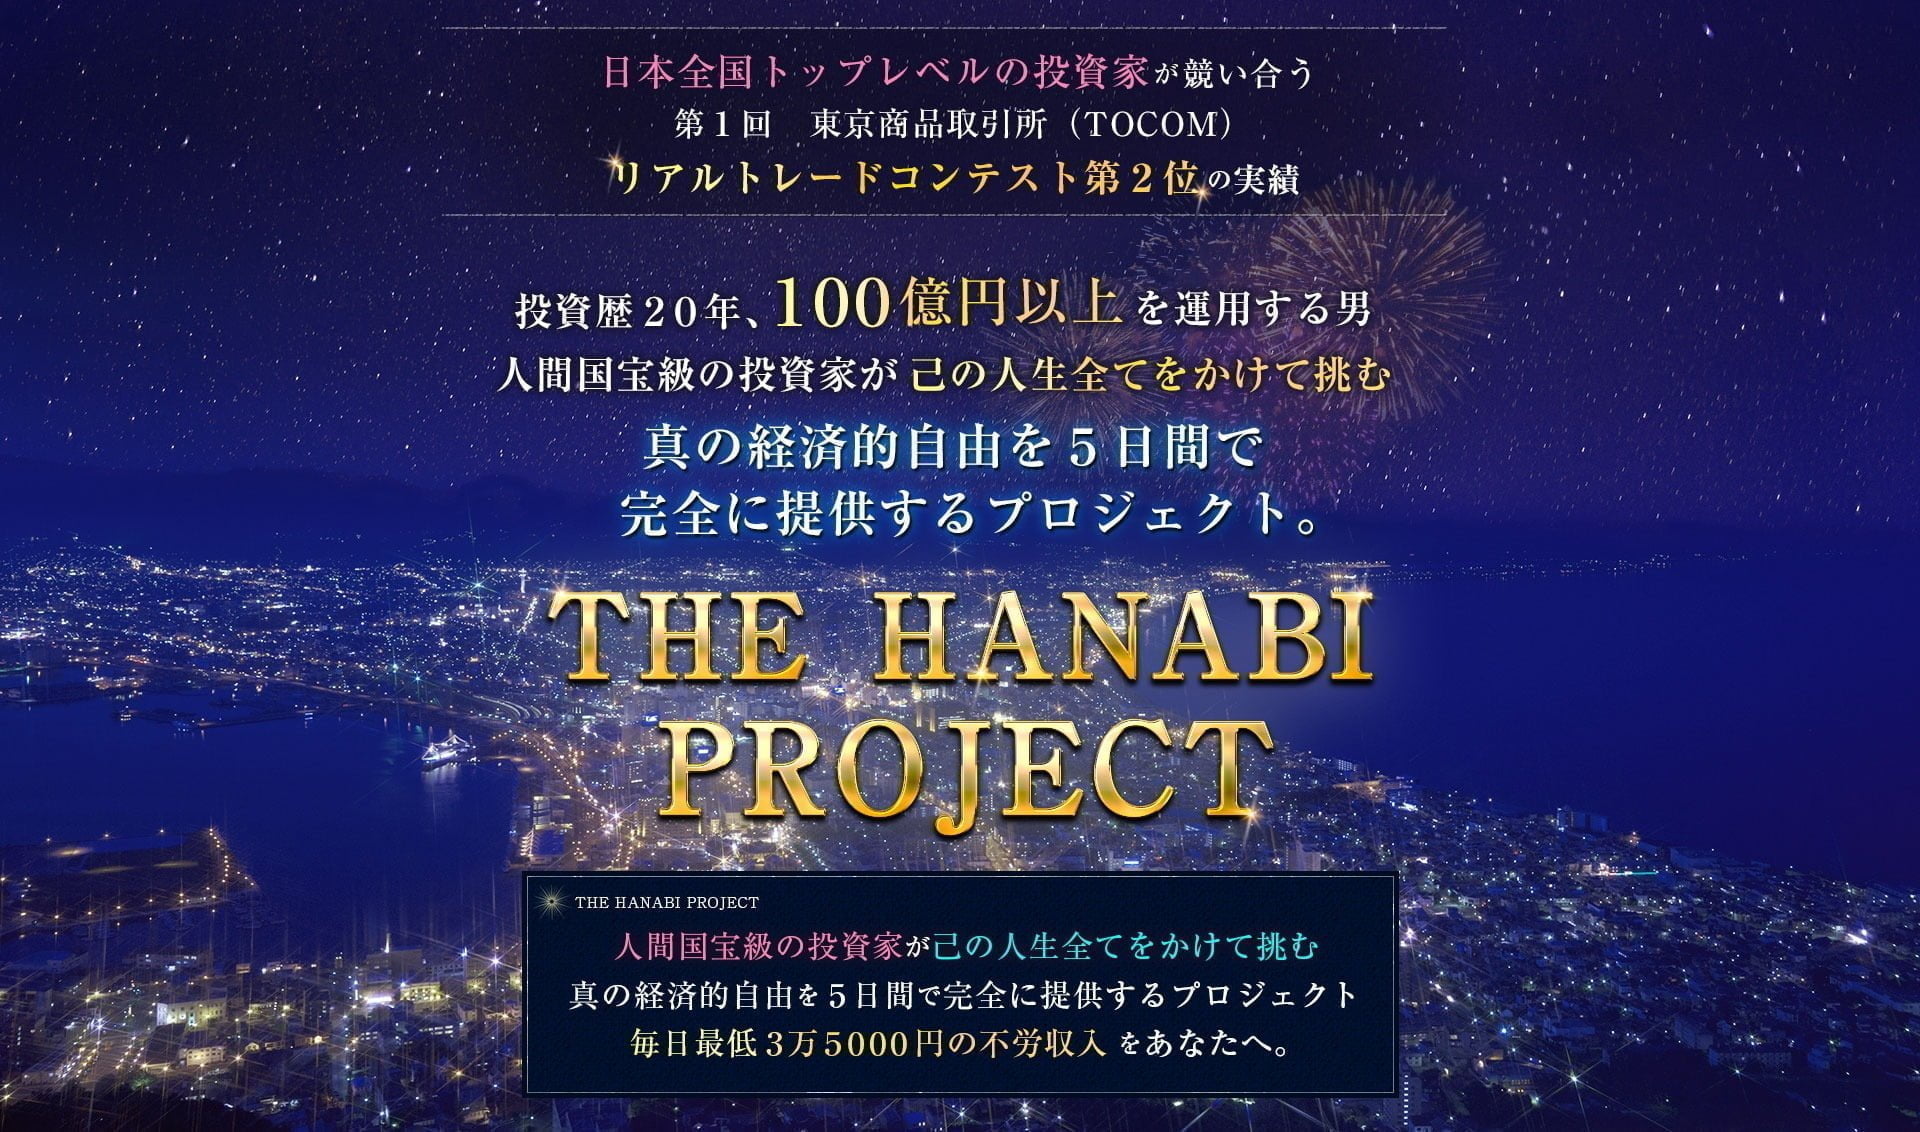 THE HANABI PROJECT